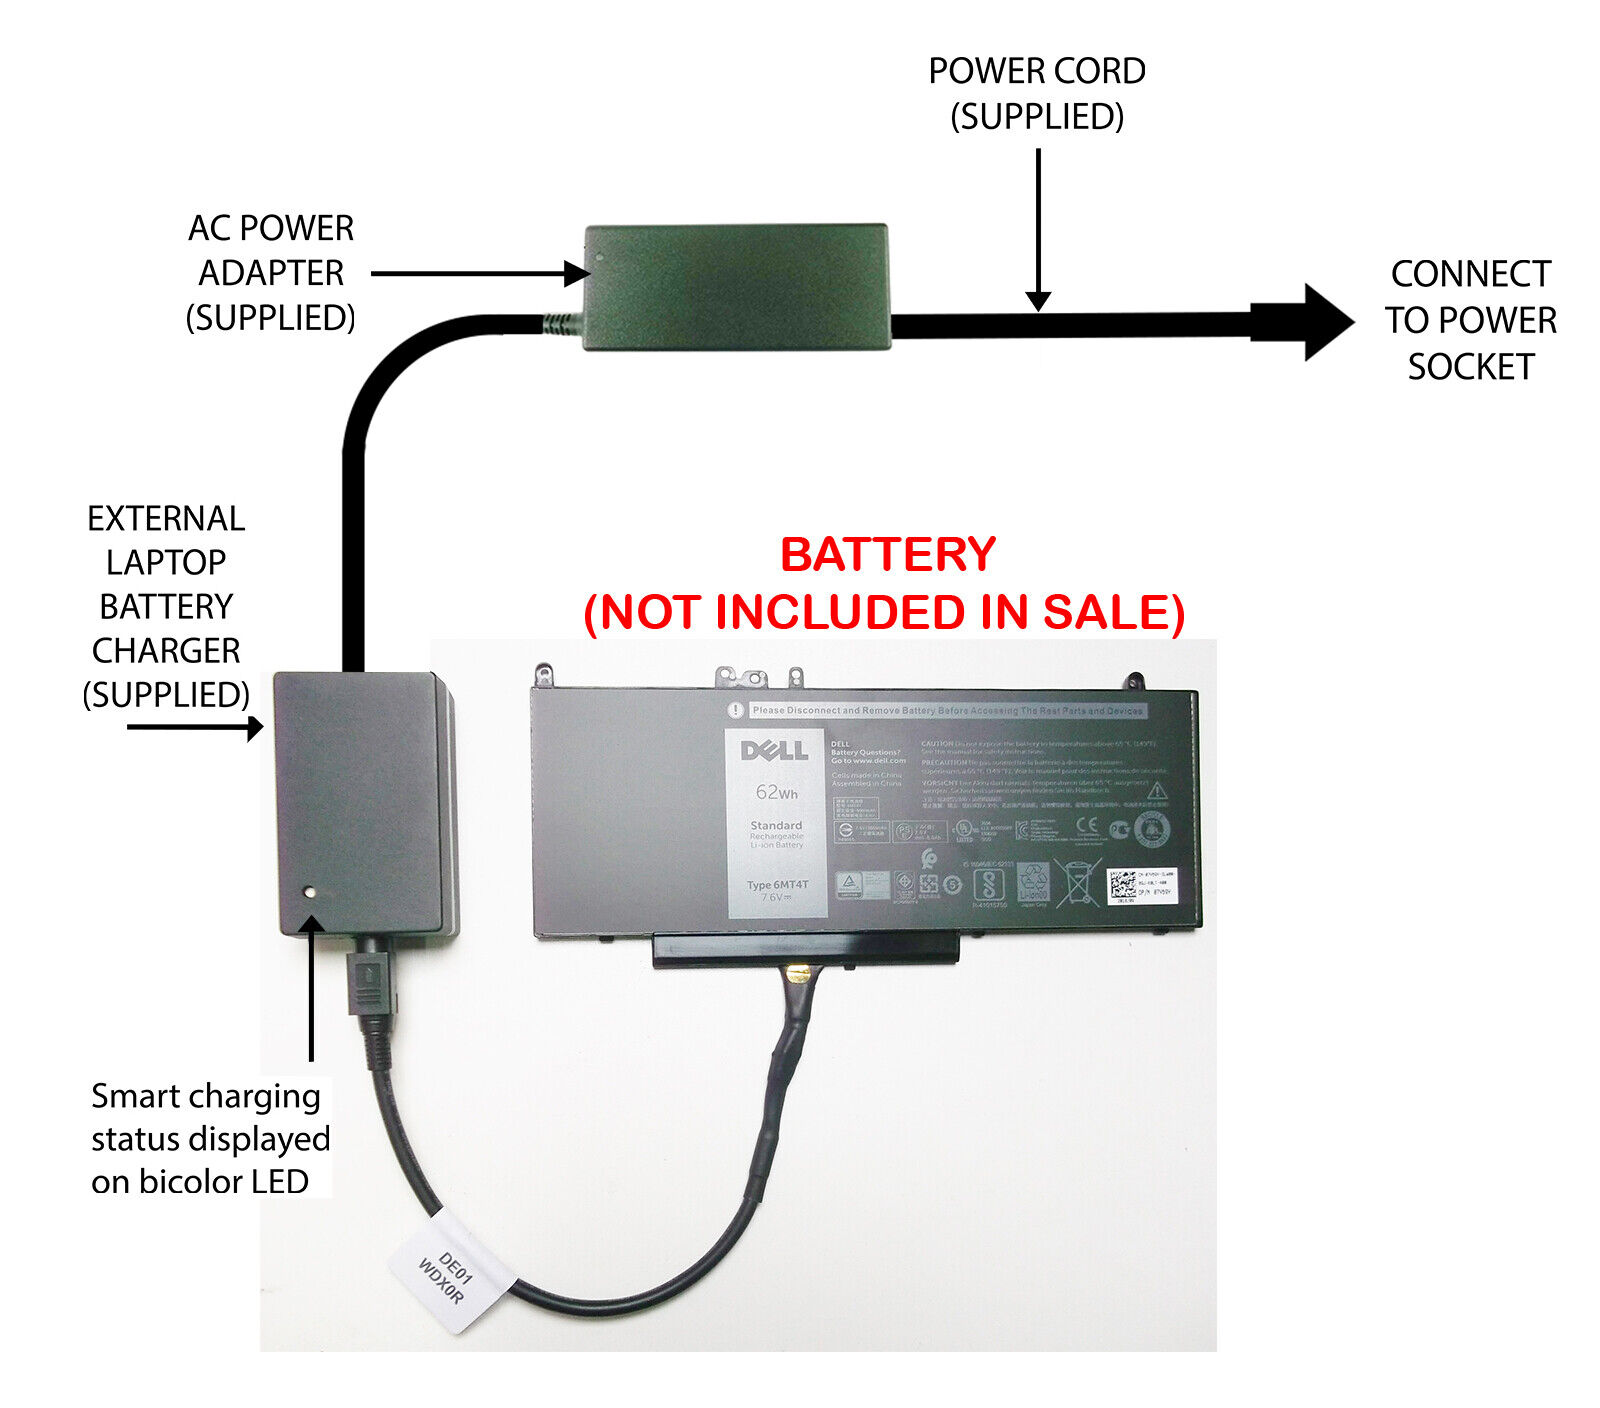 External Laptop Battery Charger for Dell Latitude E5270 E5470 E5570, 6MT4T G5M10